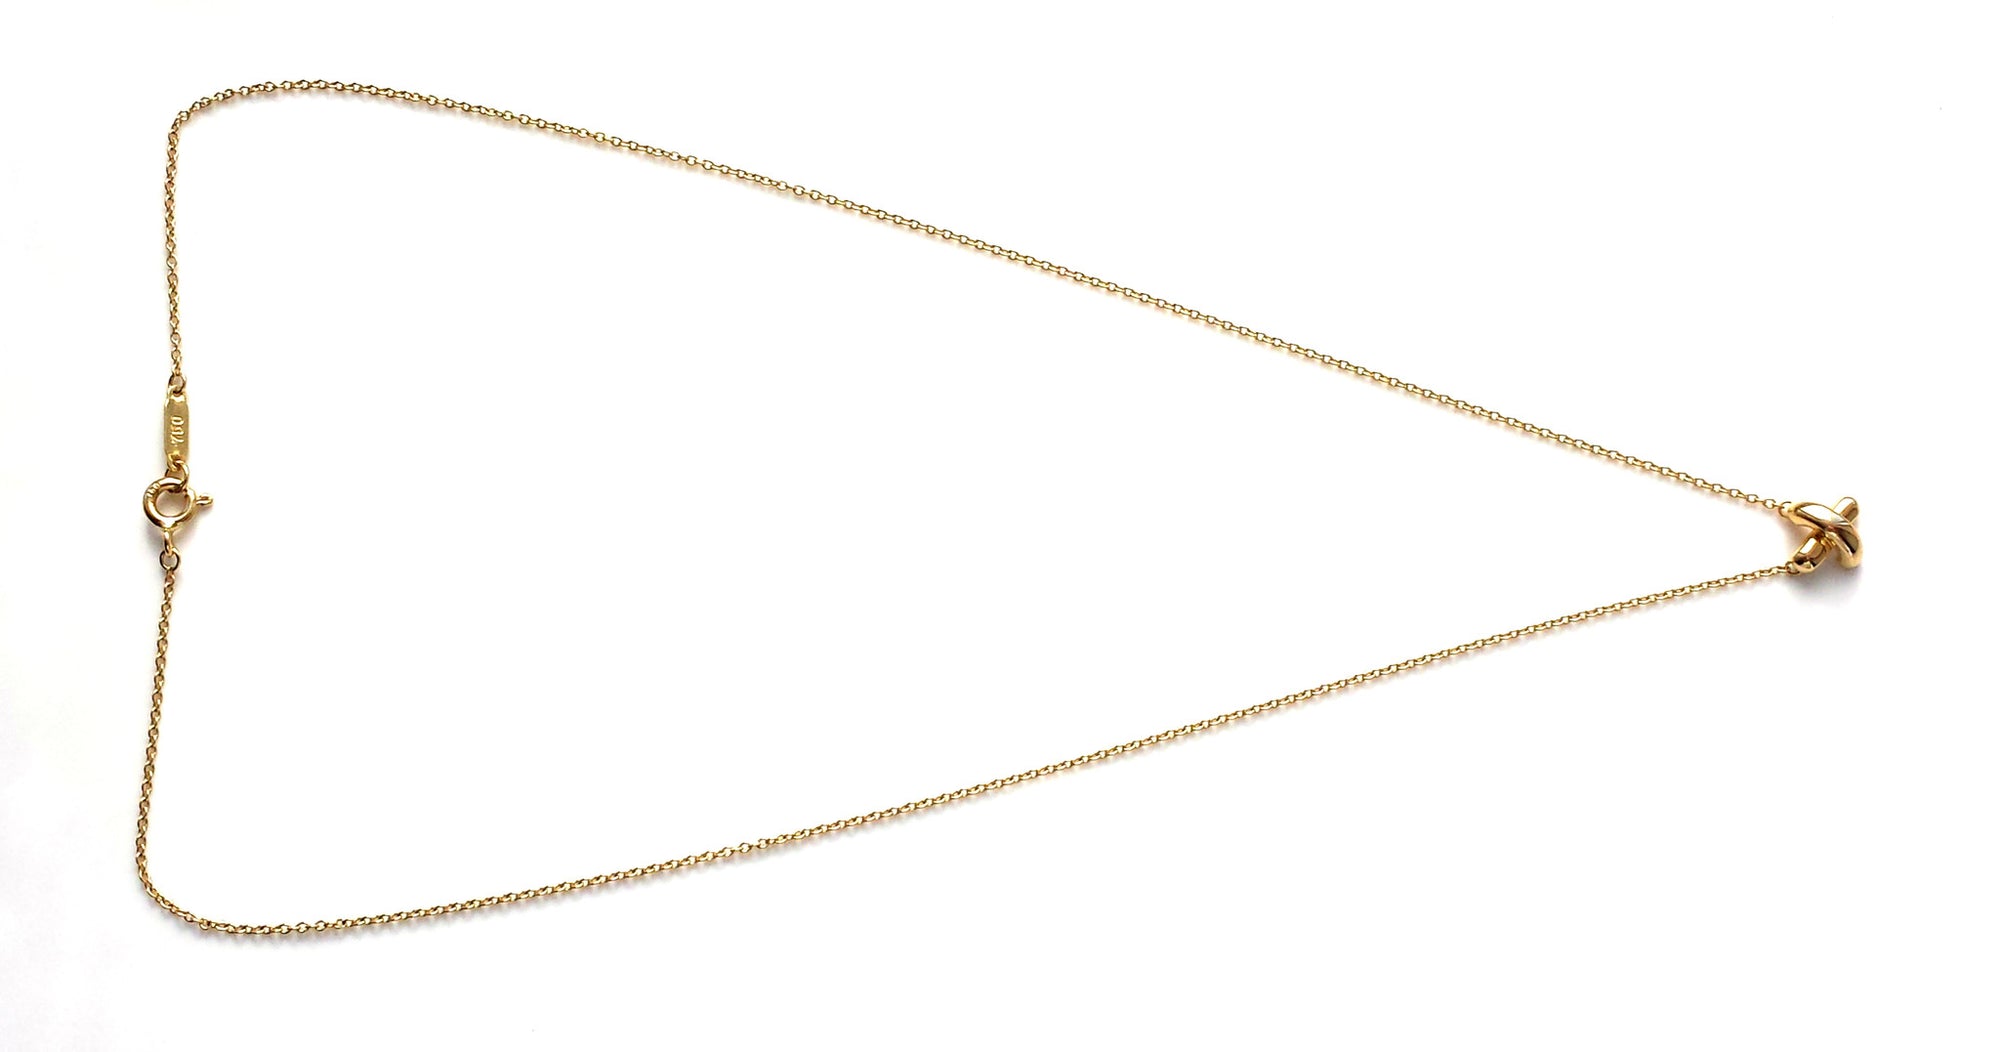 Tiffany & Co. Signature 'X' 18k Yellow Gold Pendant – 16 inch